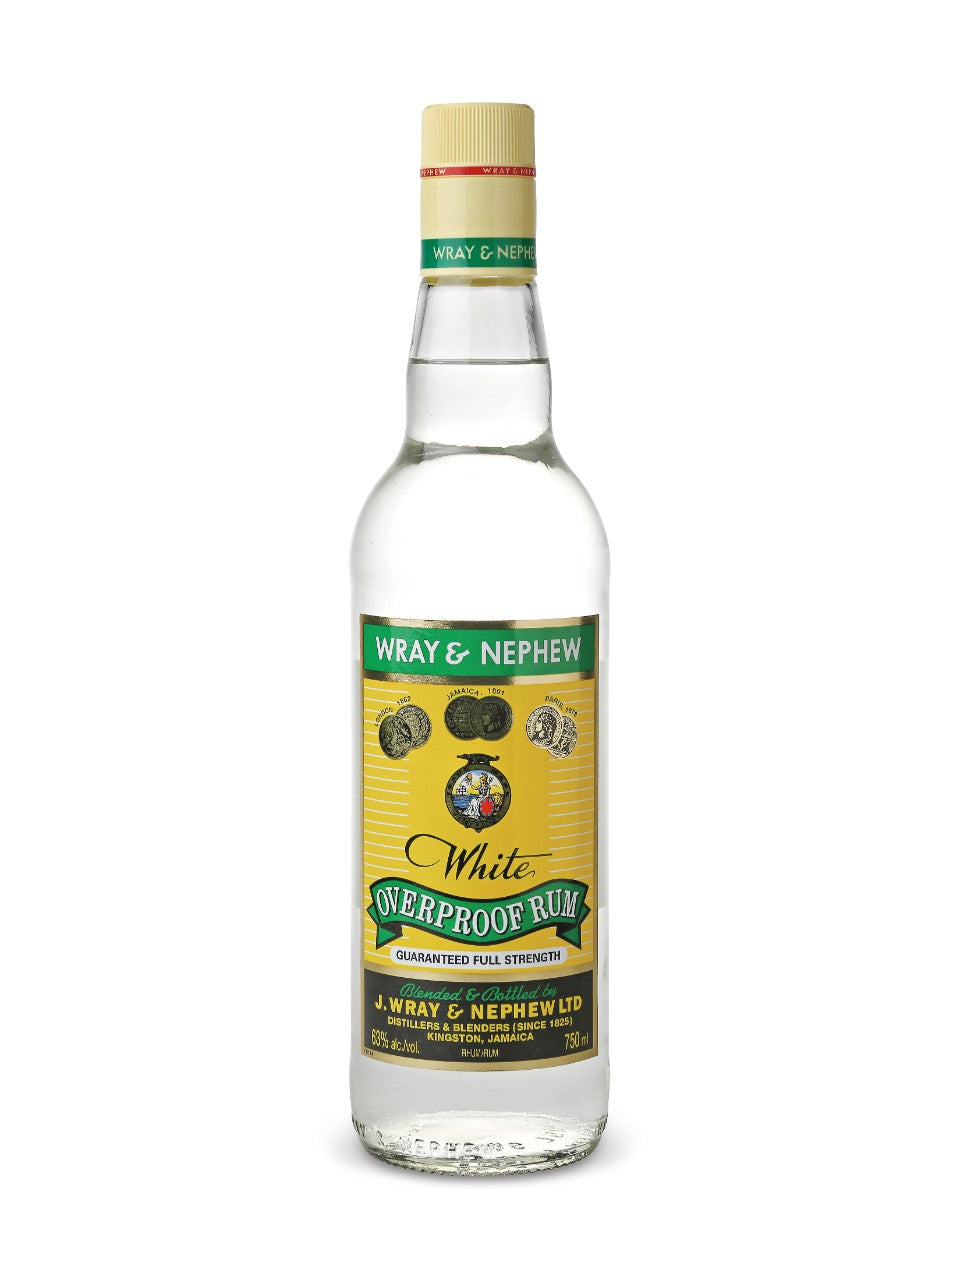 Wray & Nephew White Overproof Rum 750 mL bottle